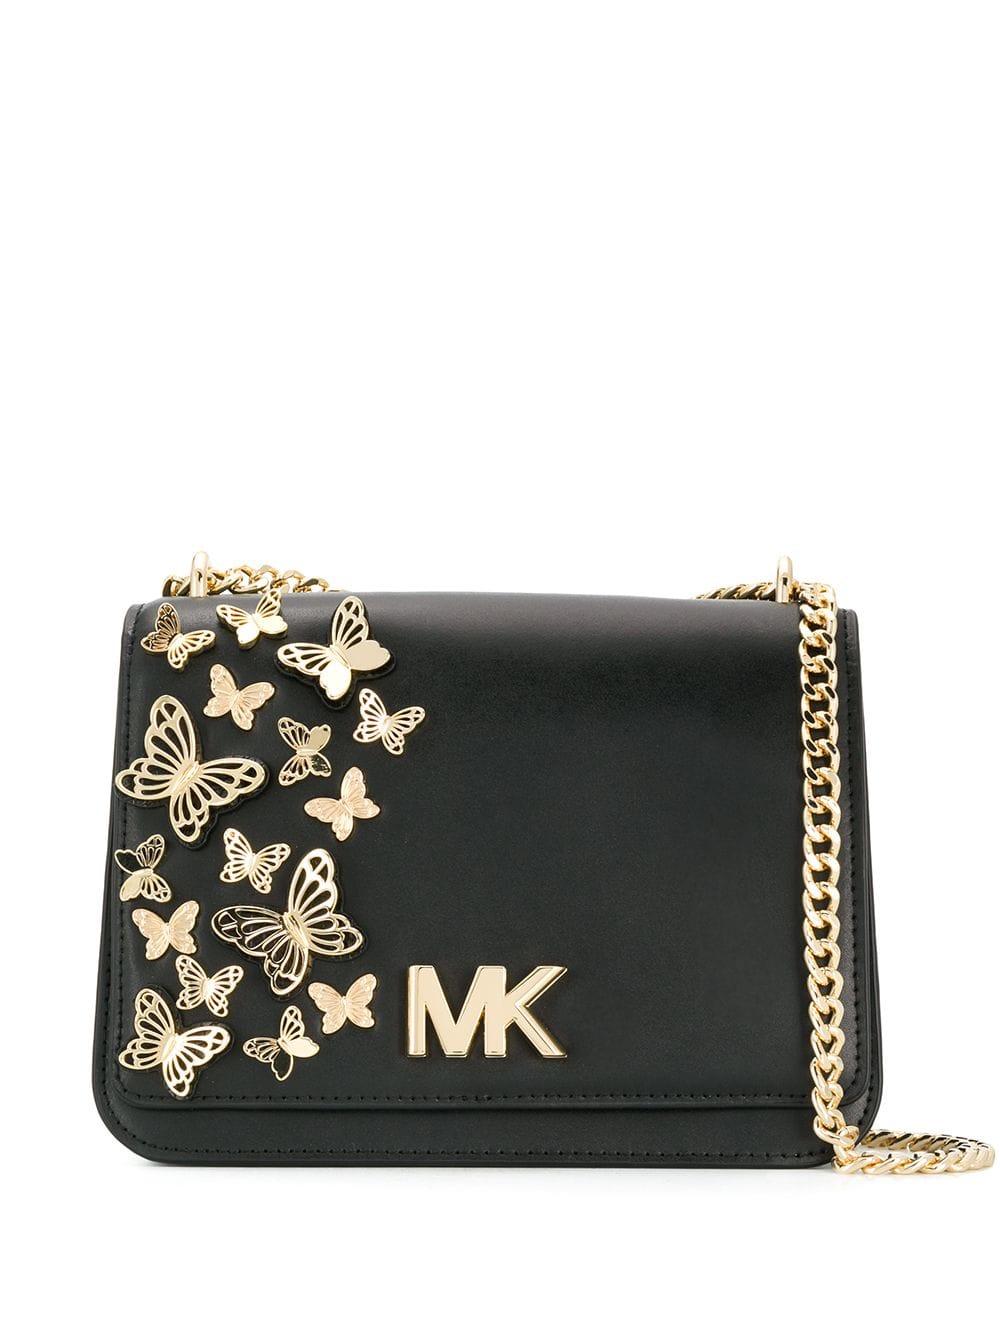 MICHAEL Michael Kors Leather Mott Butterfly Crossbody Bag in Black - Lyst